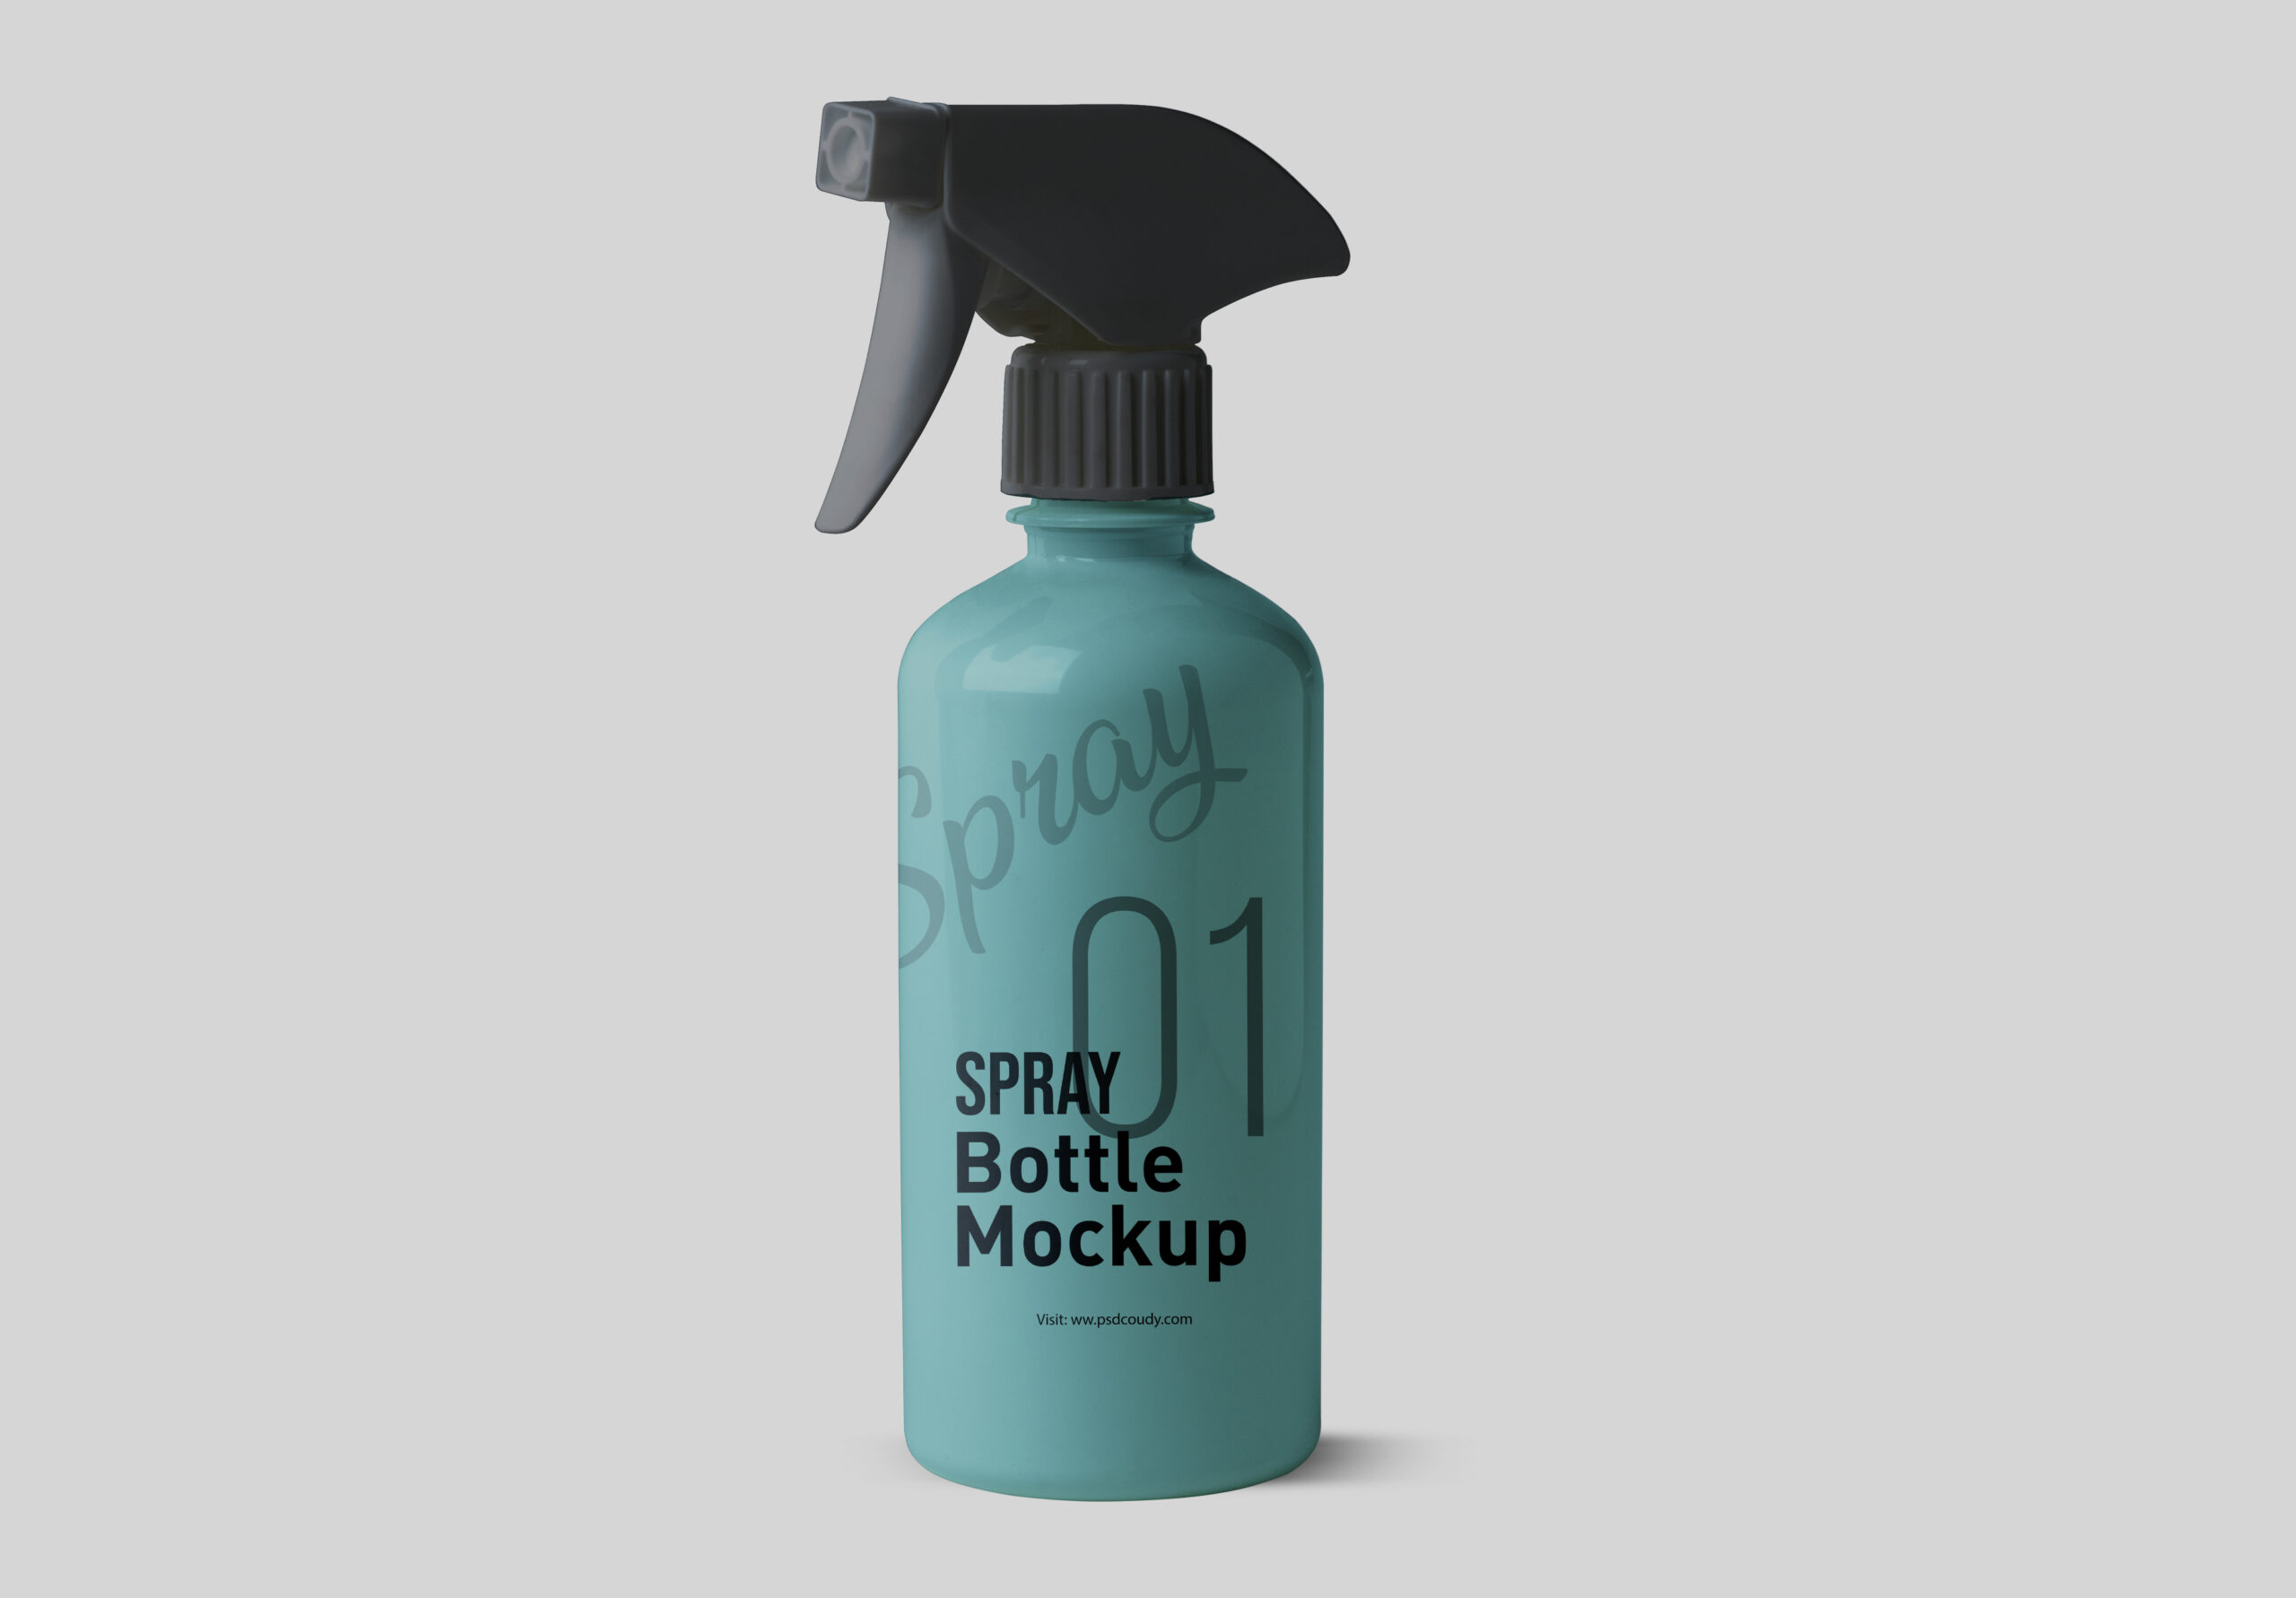 Spray Bottle Mockup Free PSD Download1